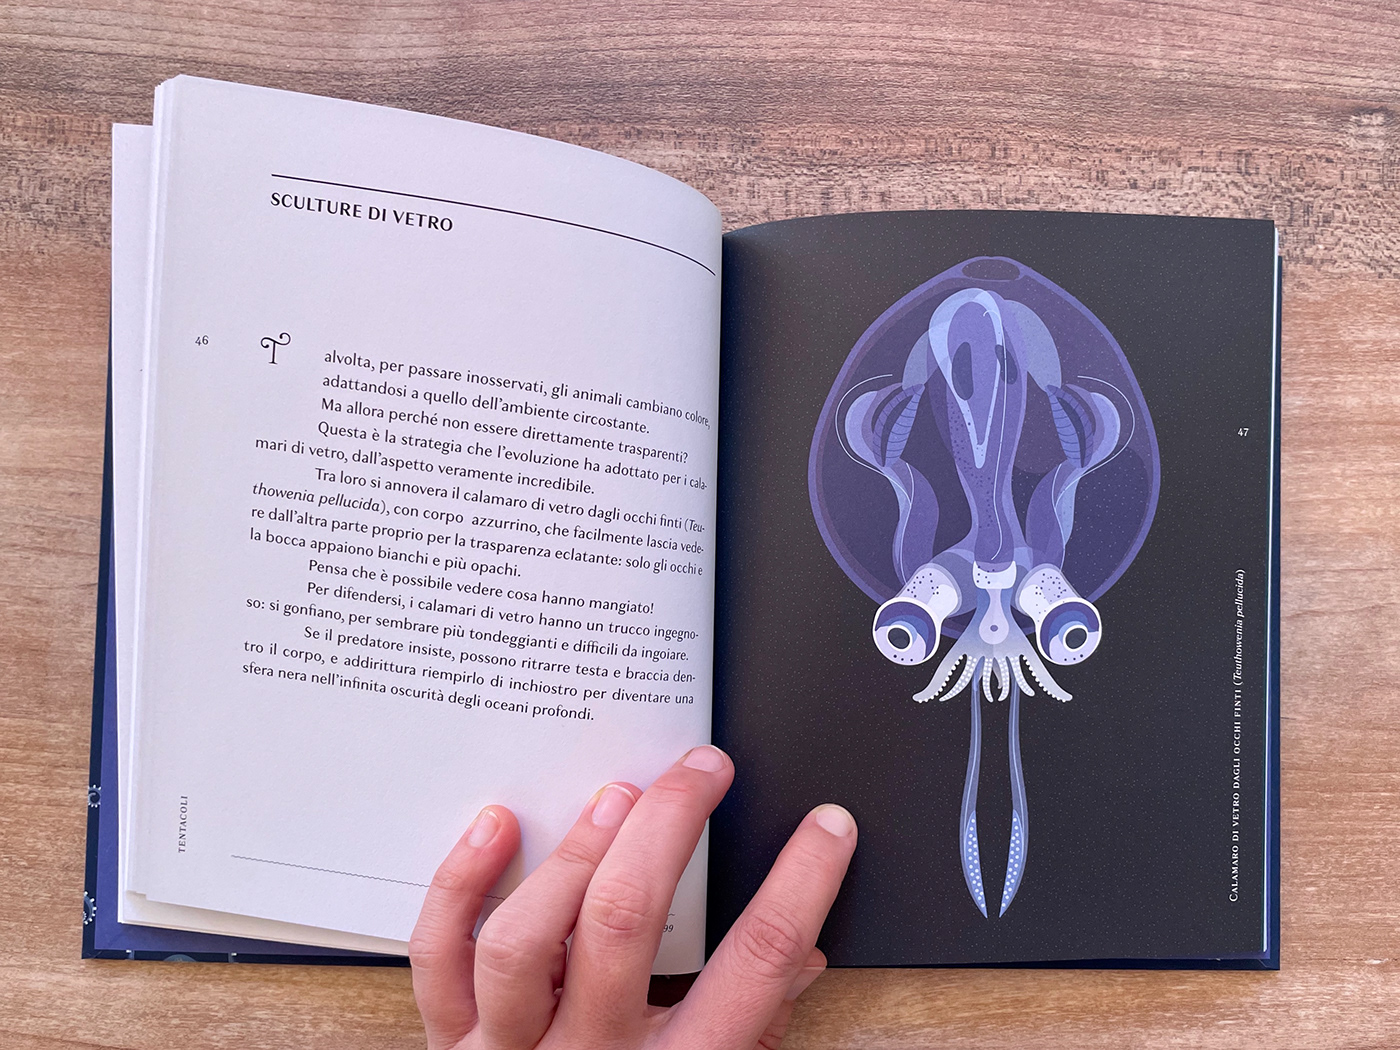 octopus cephalopods marine Ocean ILLUSTRATION  nomos infographics polpi naturalistic illustration Craig Foster